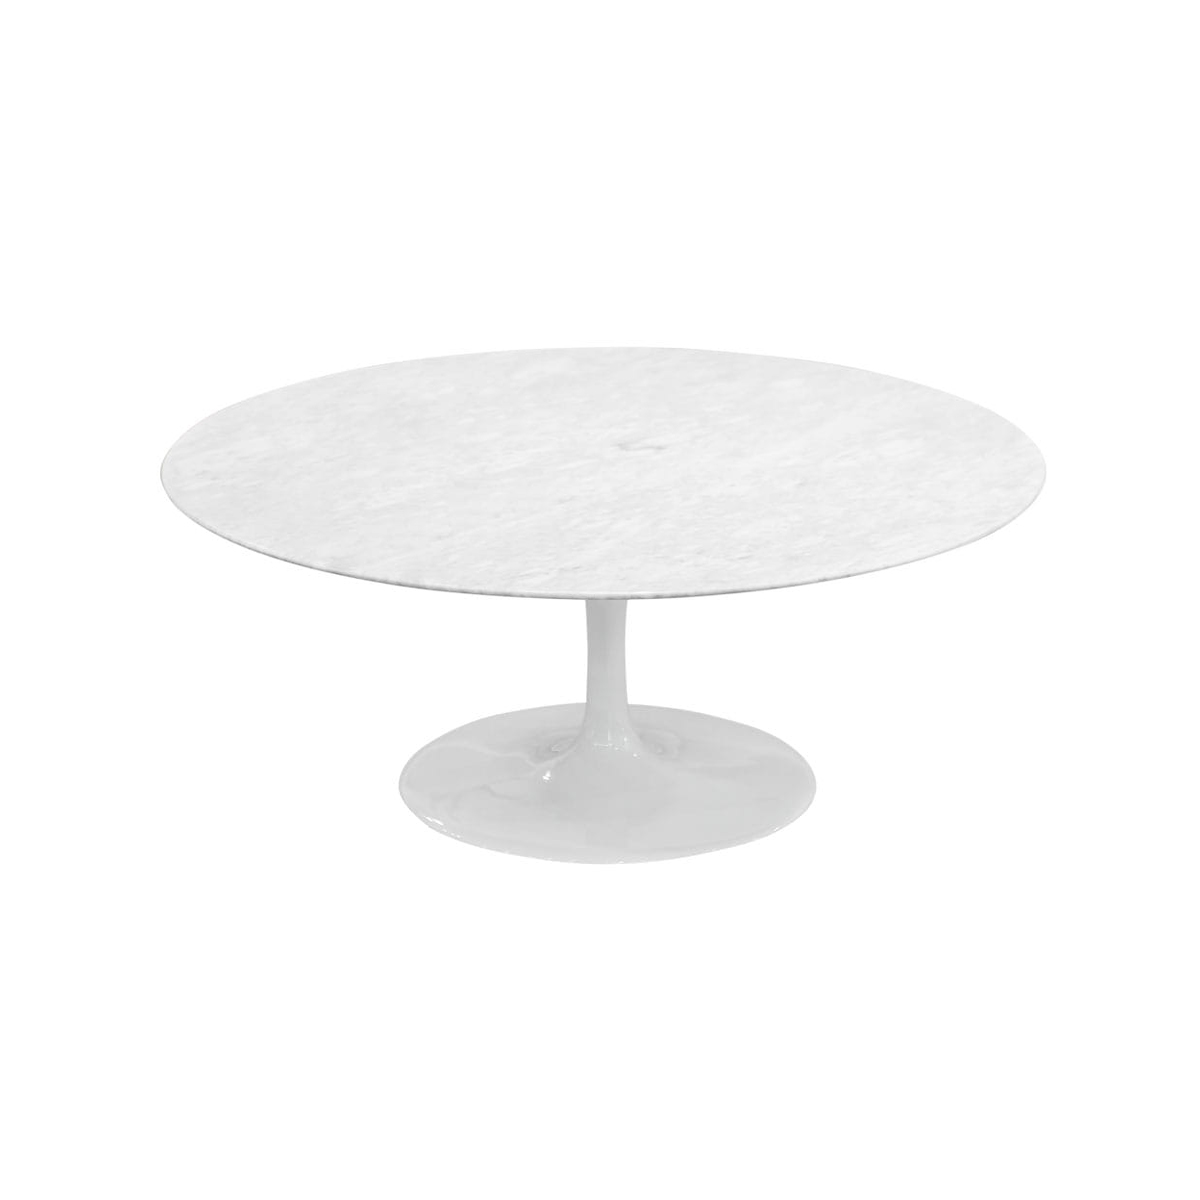 Round Marble Coffee Table원형 대리석 커피테이블 (Ø80)